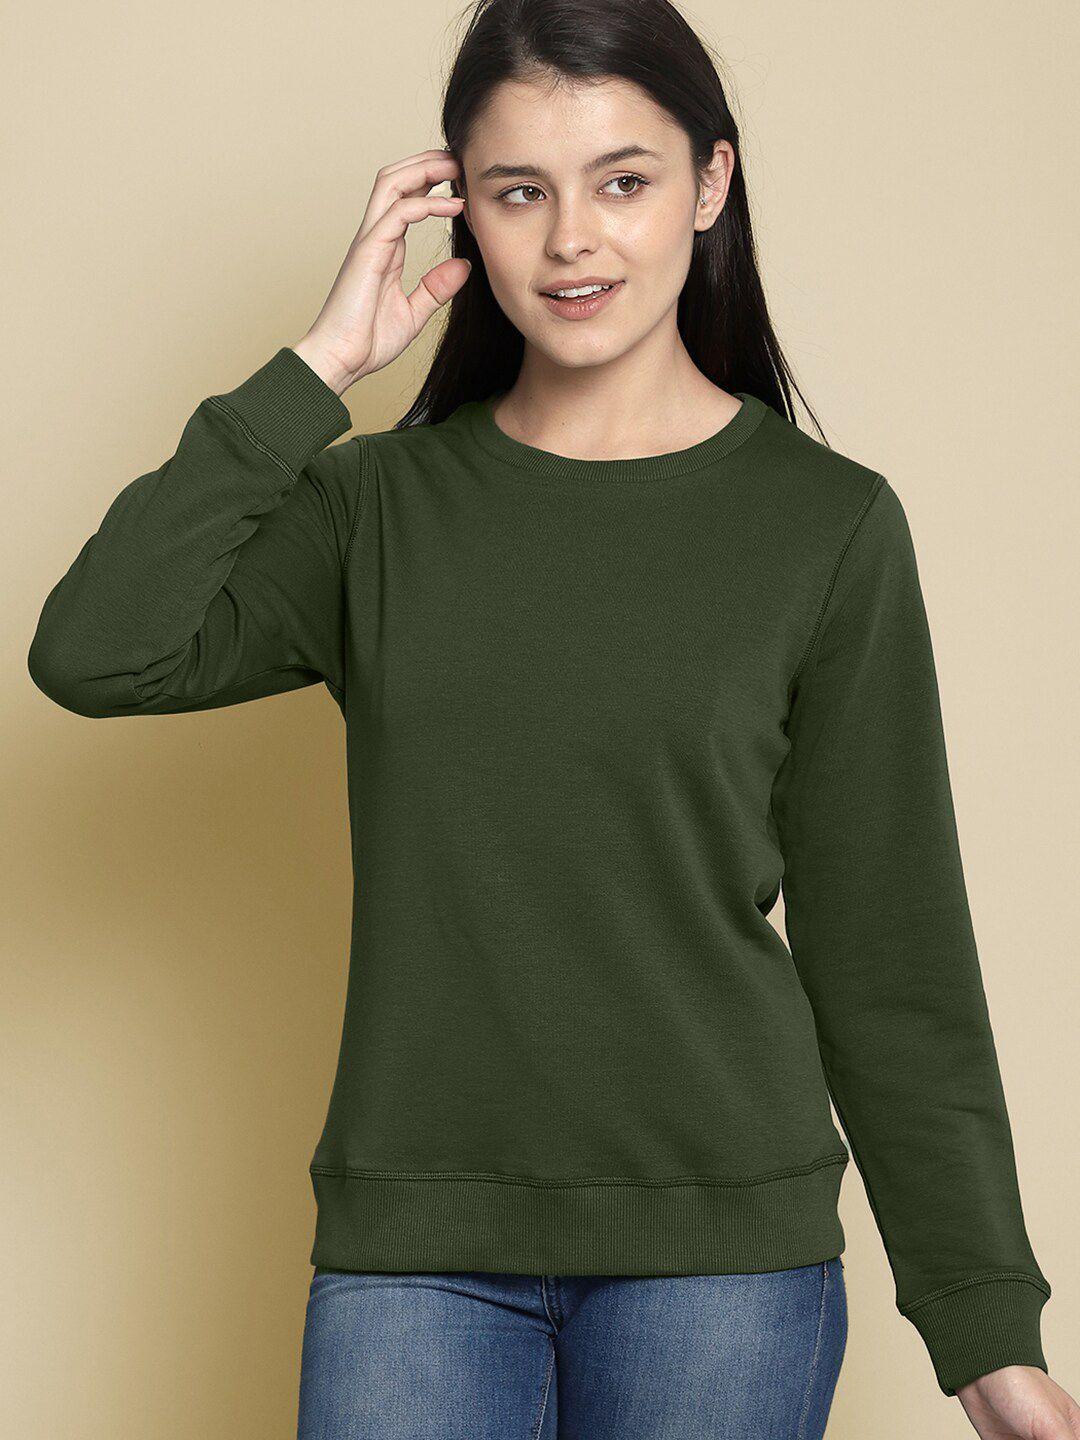 free authority women olive green sweatshirt